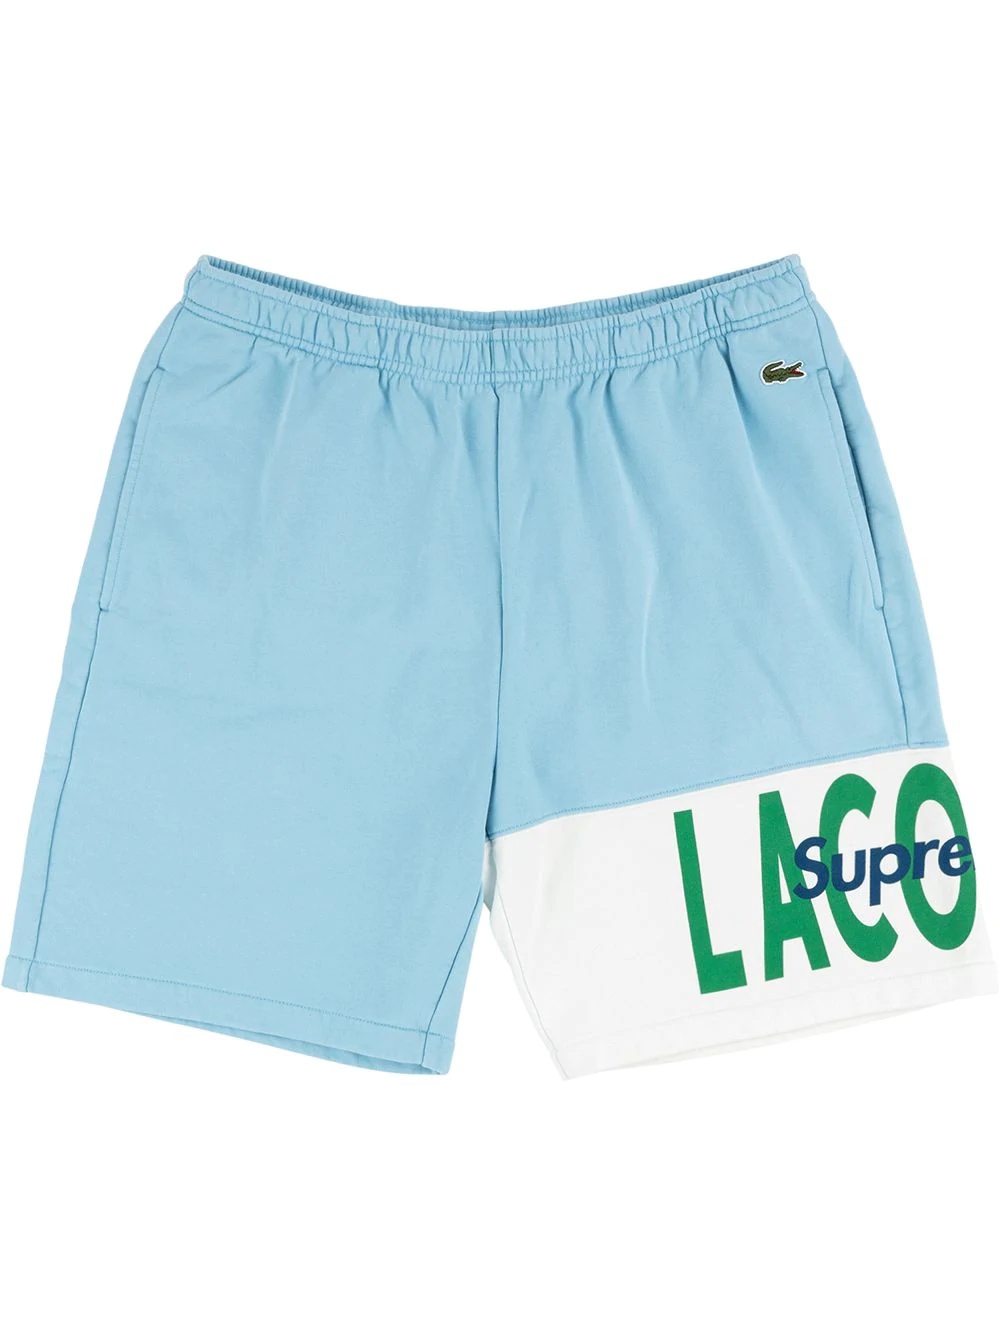 x Lacoste logo panel sweat shorts - 1